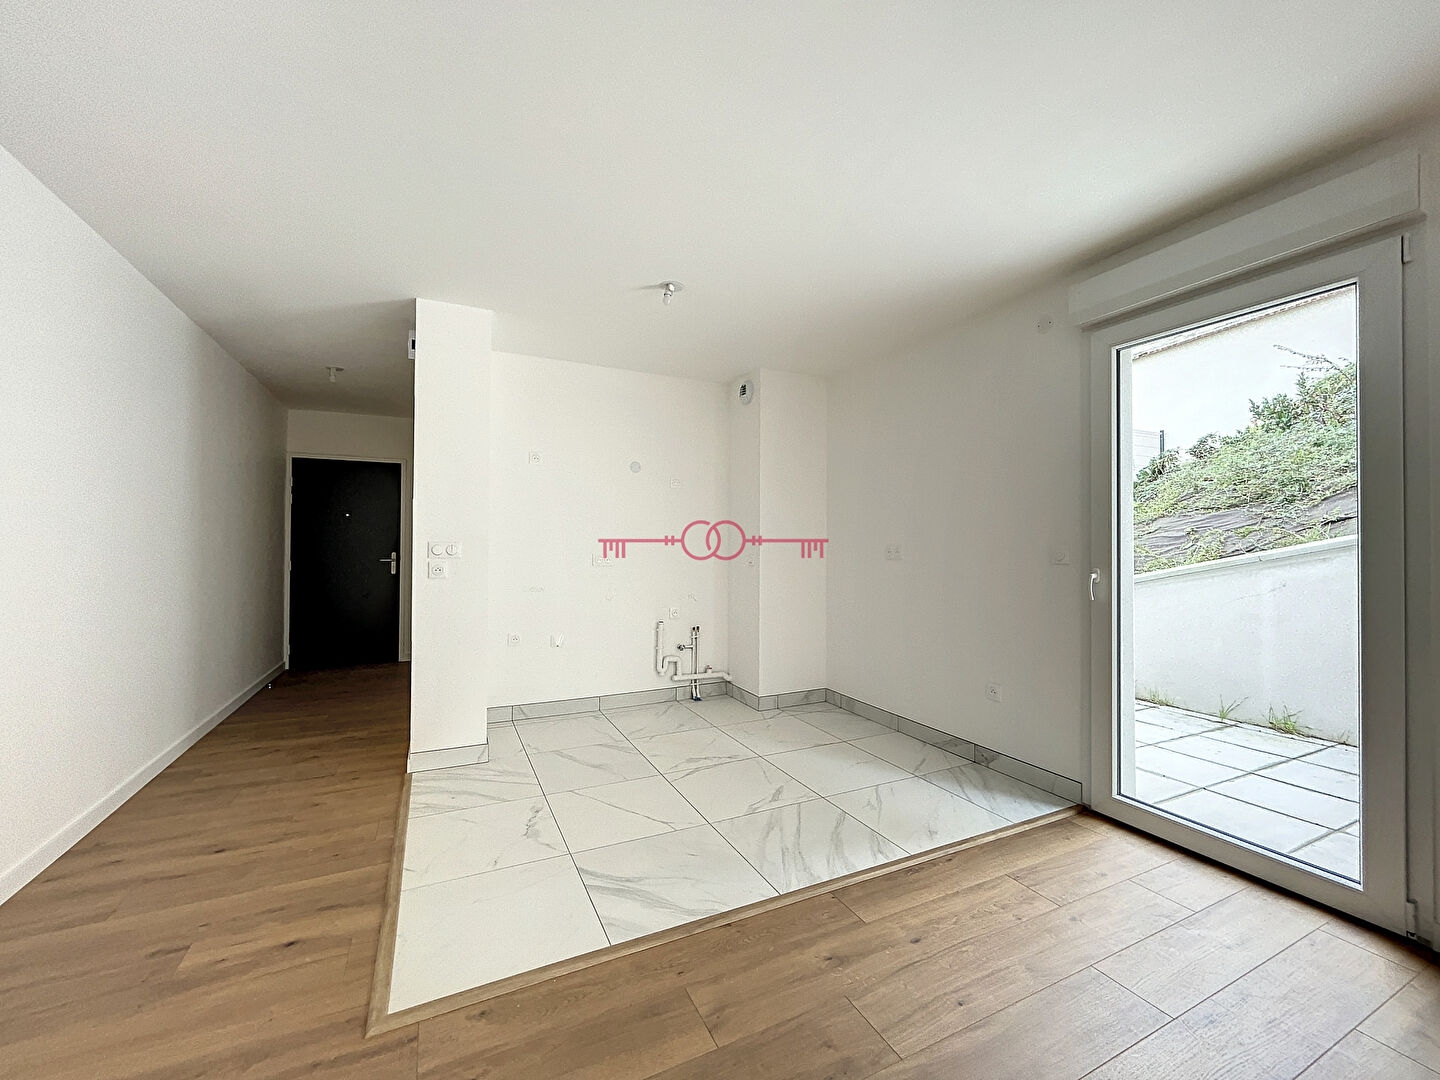 NEUF - Appartement 4 pièce(s) 90,87 m2 - 2